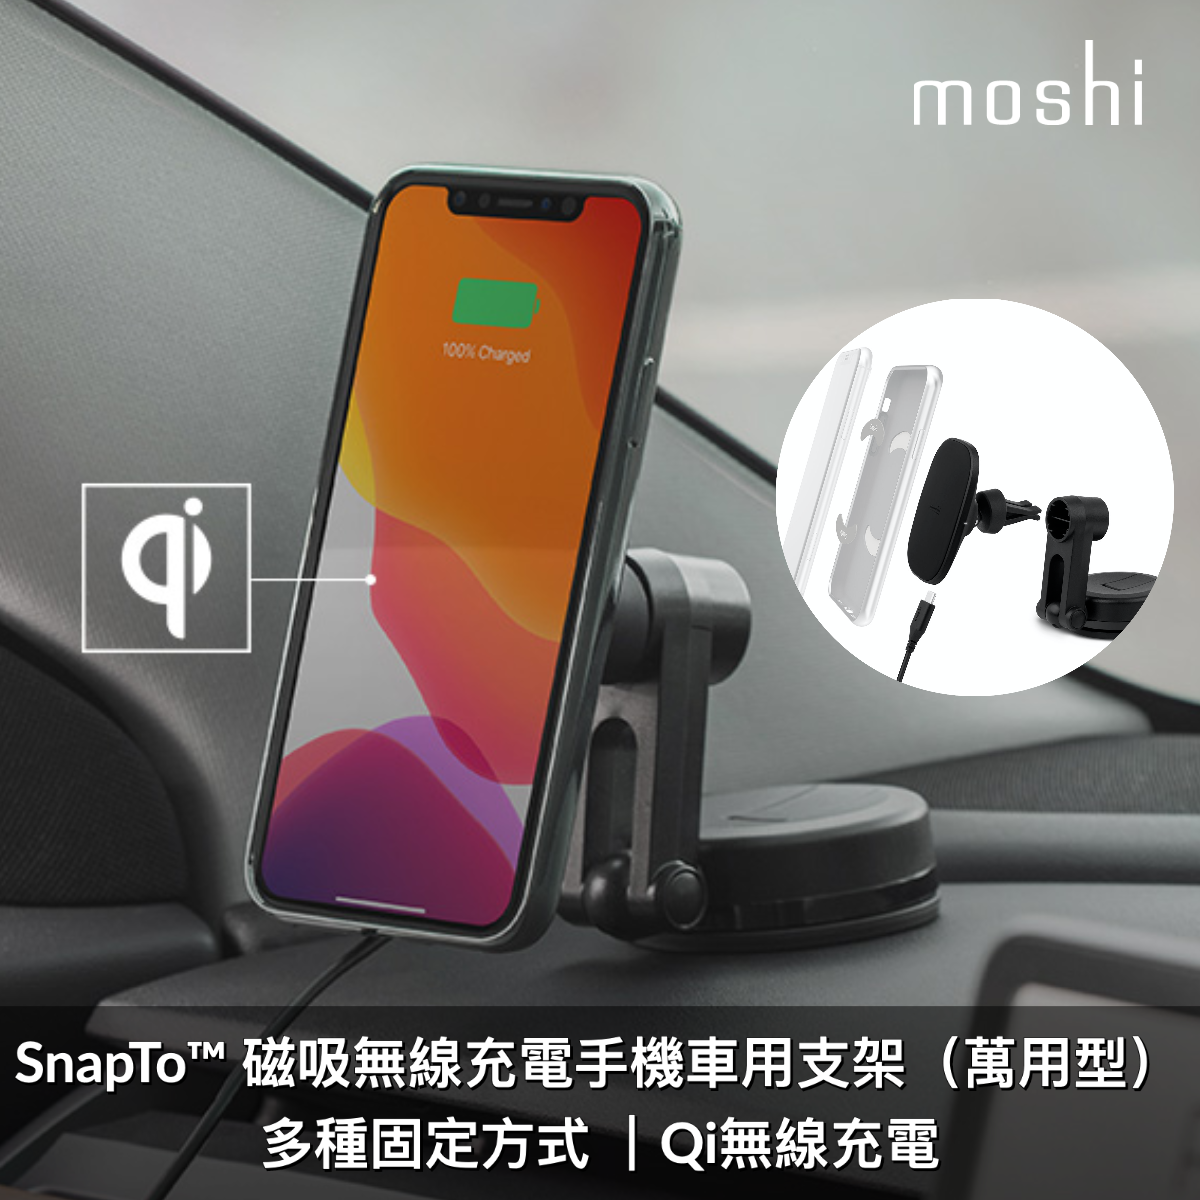 Moshi Snapto 磁吸無線充電手機車用支架 萬用型 In Smart 網上購物